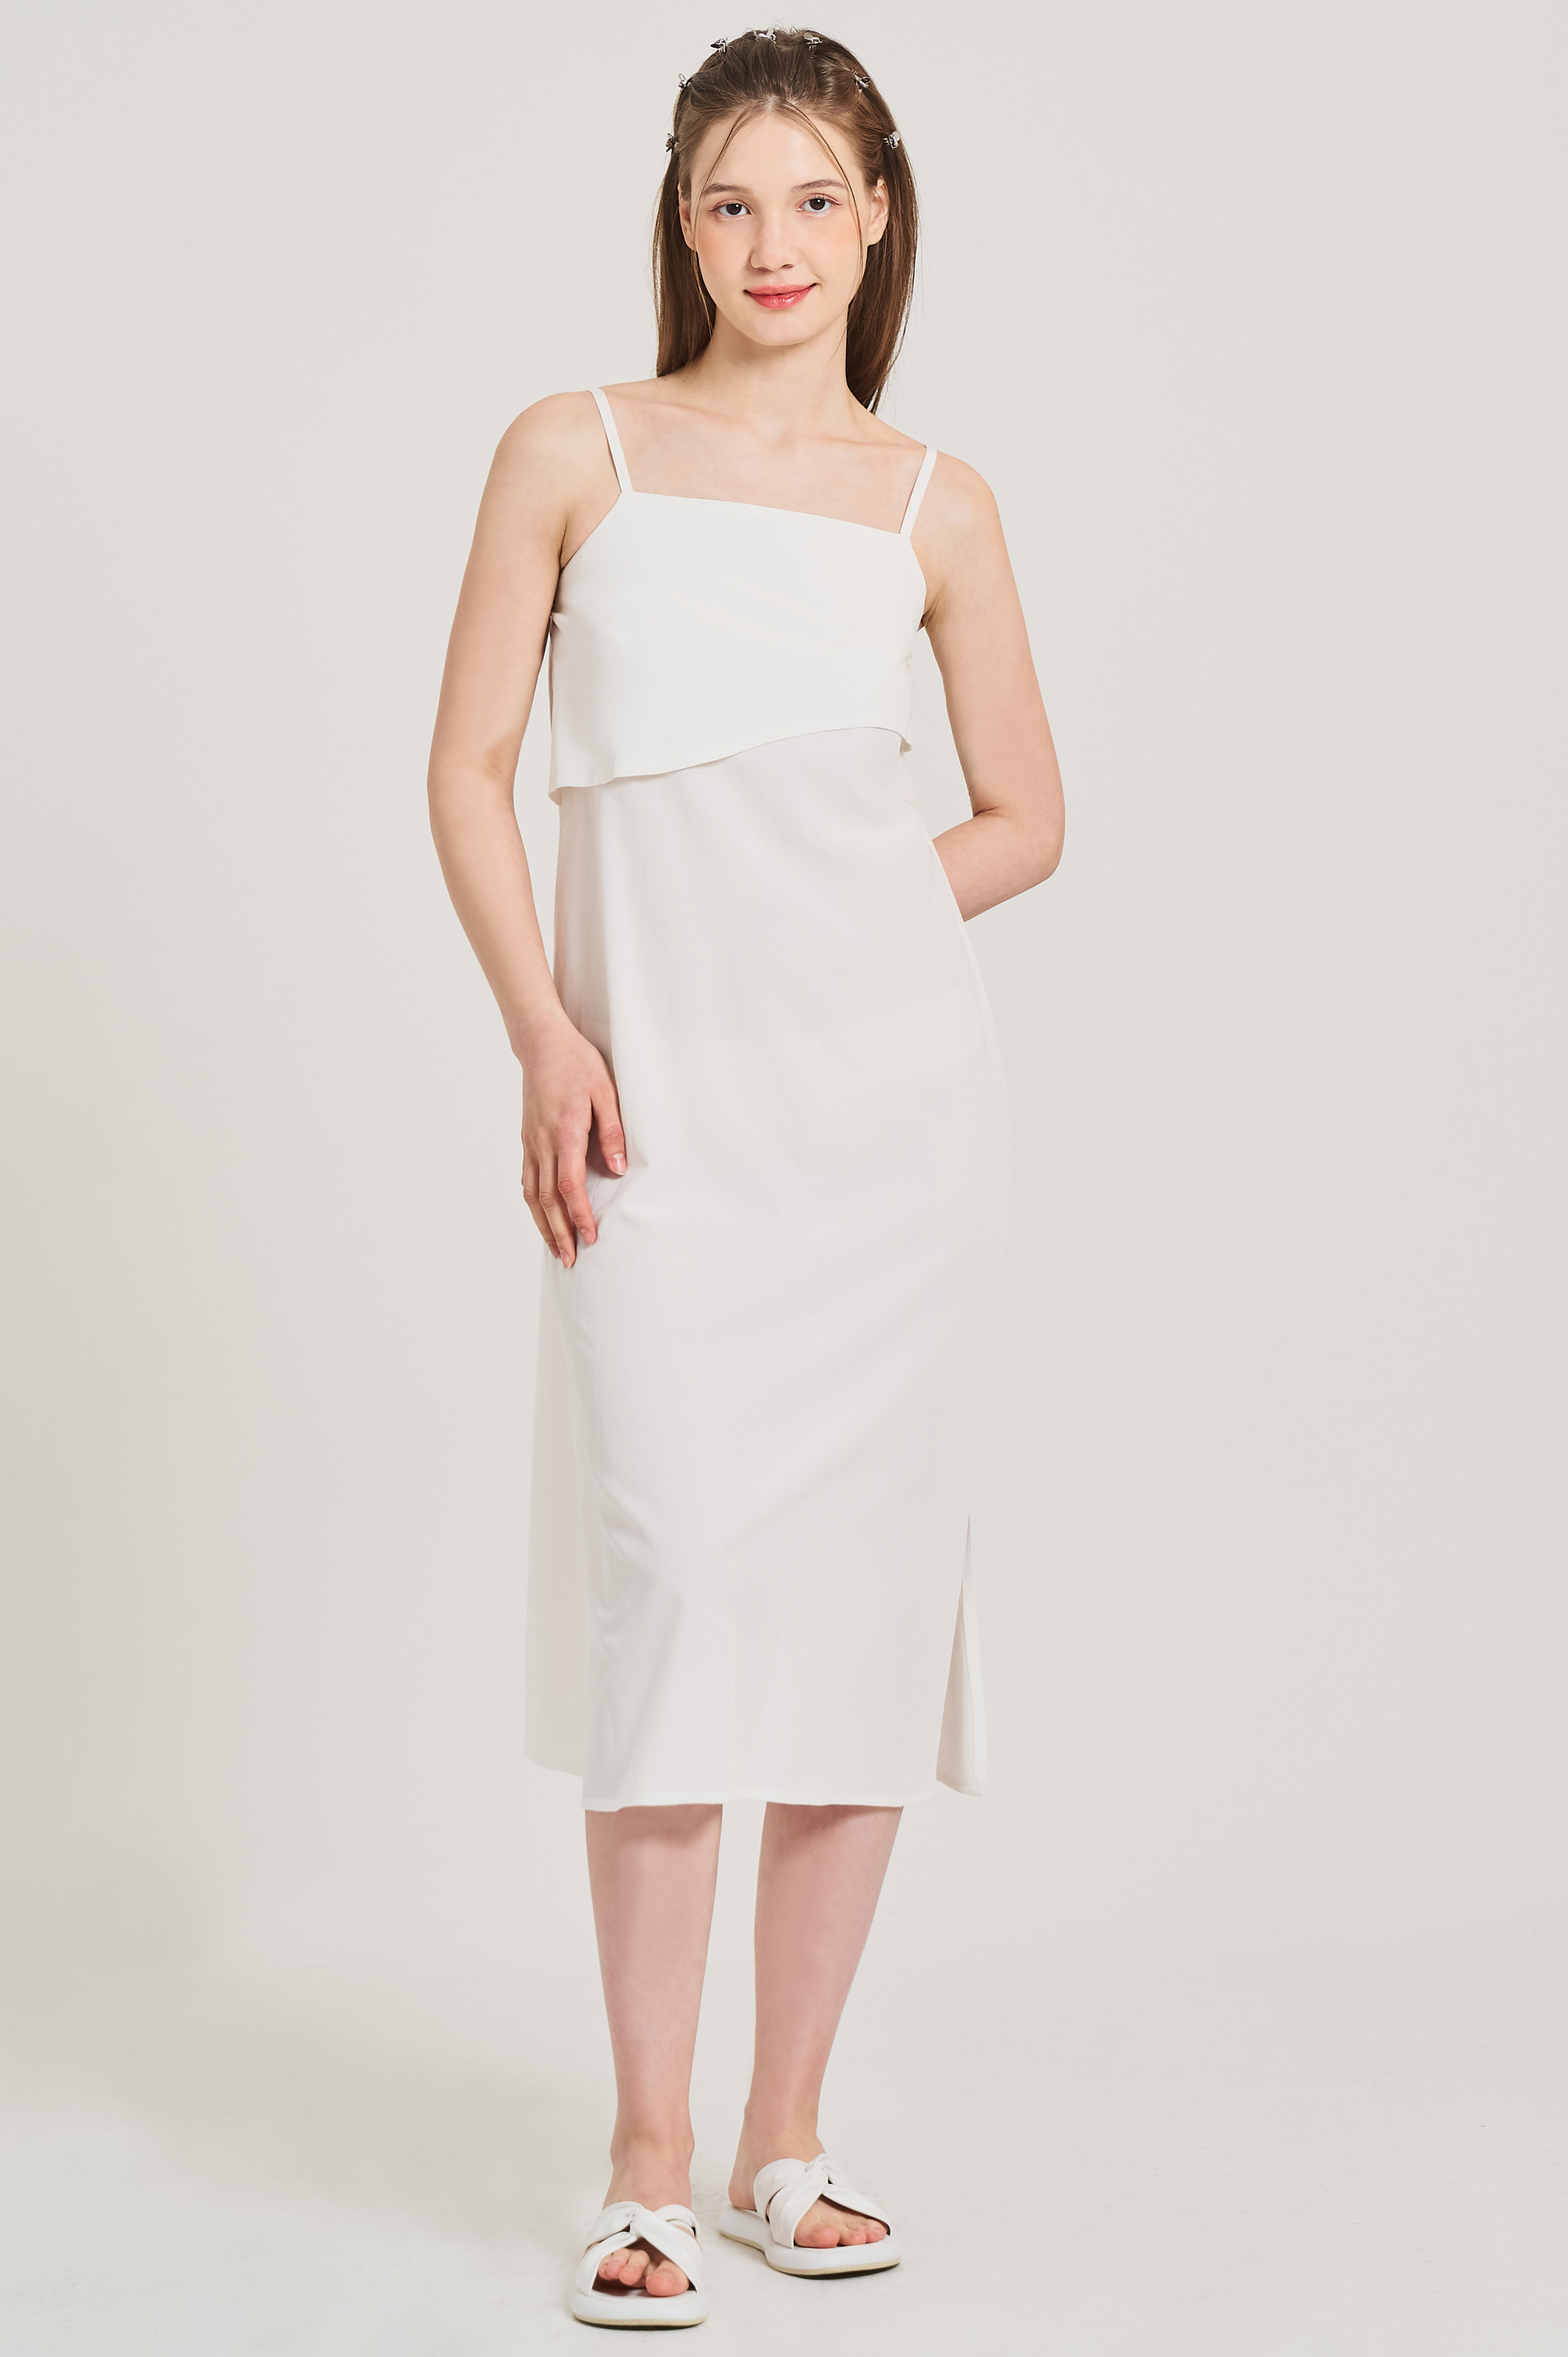 BUCKLE SLEEVELESS DRESS-white, 혜영킴, HYEYEONG KIM designer brand